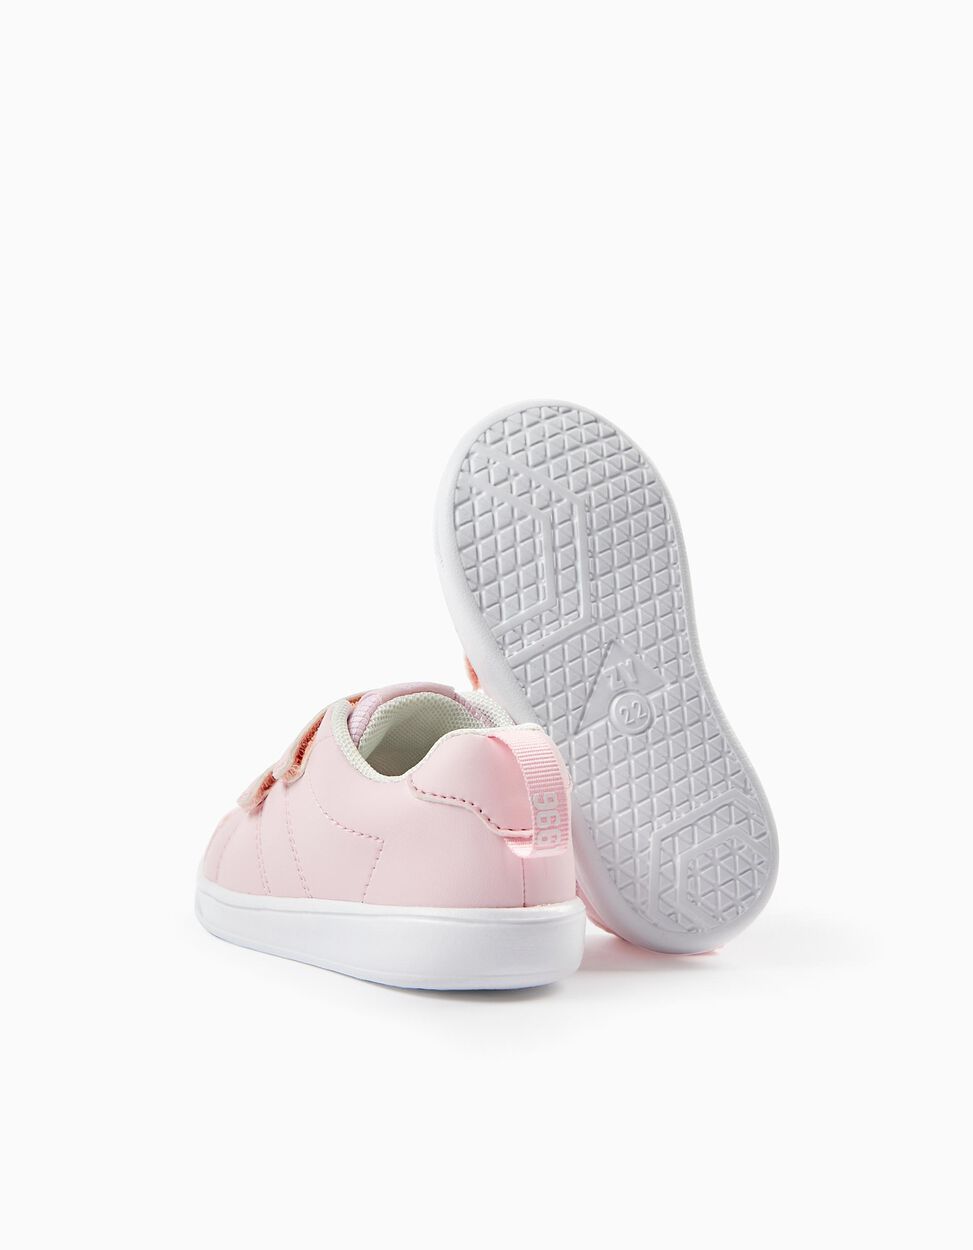 Comprar Online Sapatilhas para Bebé Menina 'My First Sneaker', Rosa/Branco